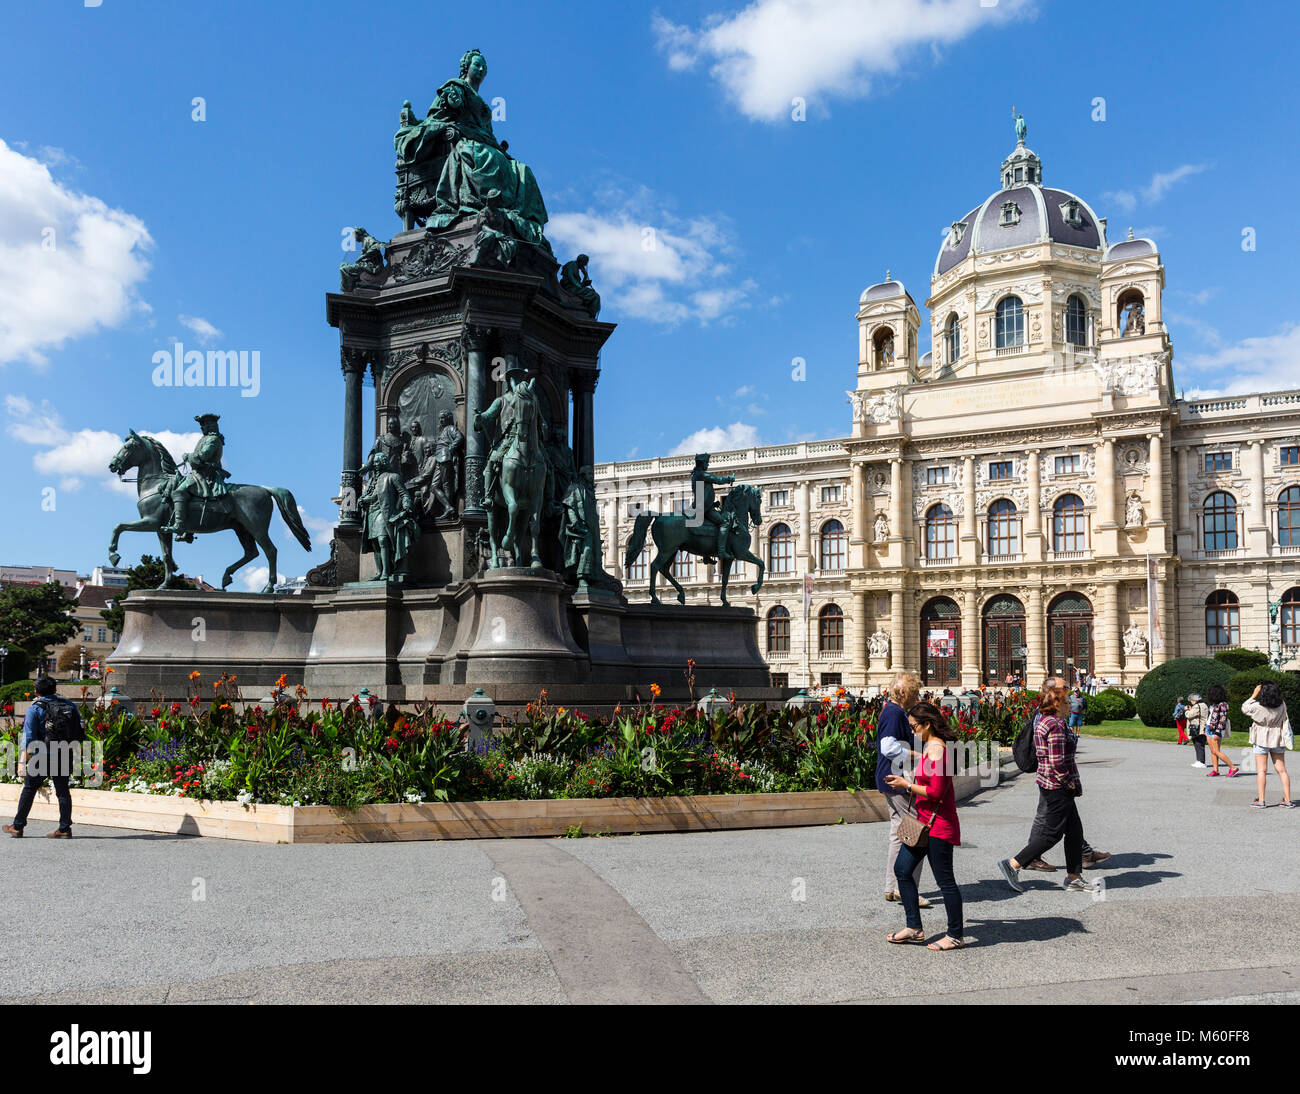 Il Naturhistorisches (Storia Naturale) Museum e il monumento all'Imperatrice Maria Teresa, Maria Theresien Platz, Vienna, Austria. Foto Stock